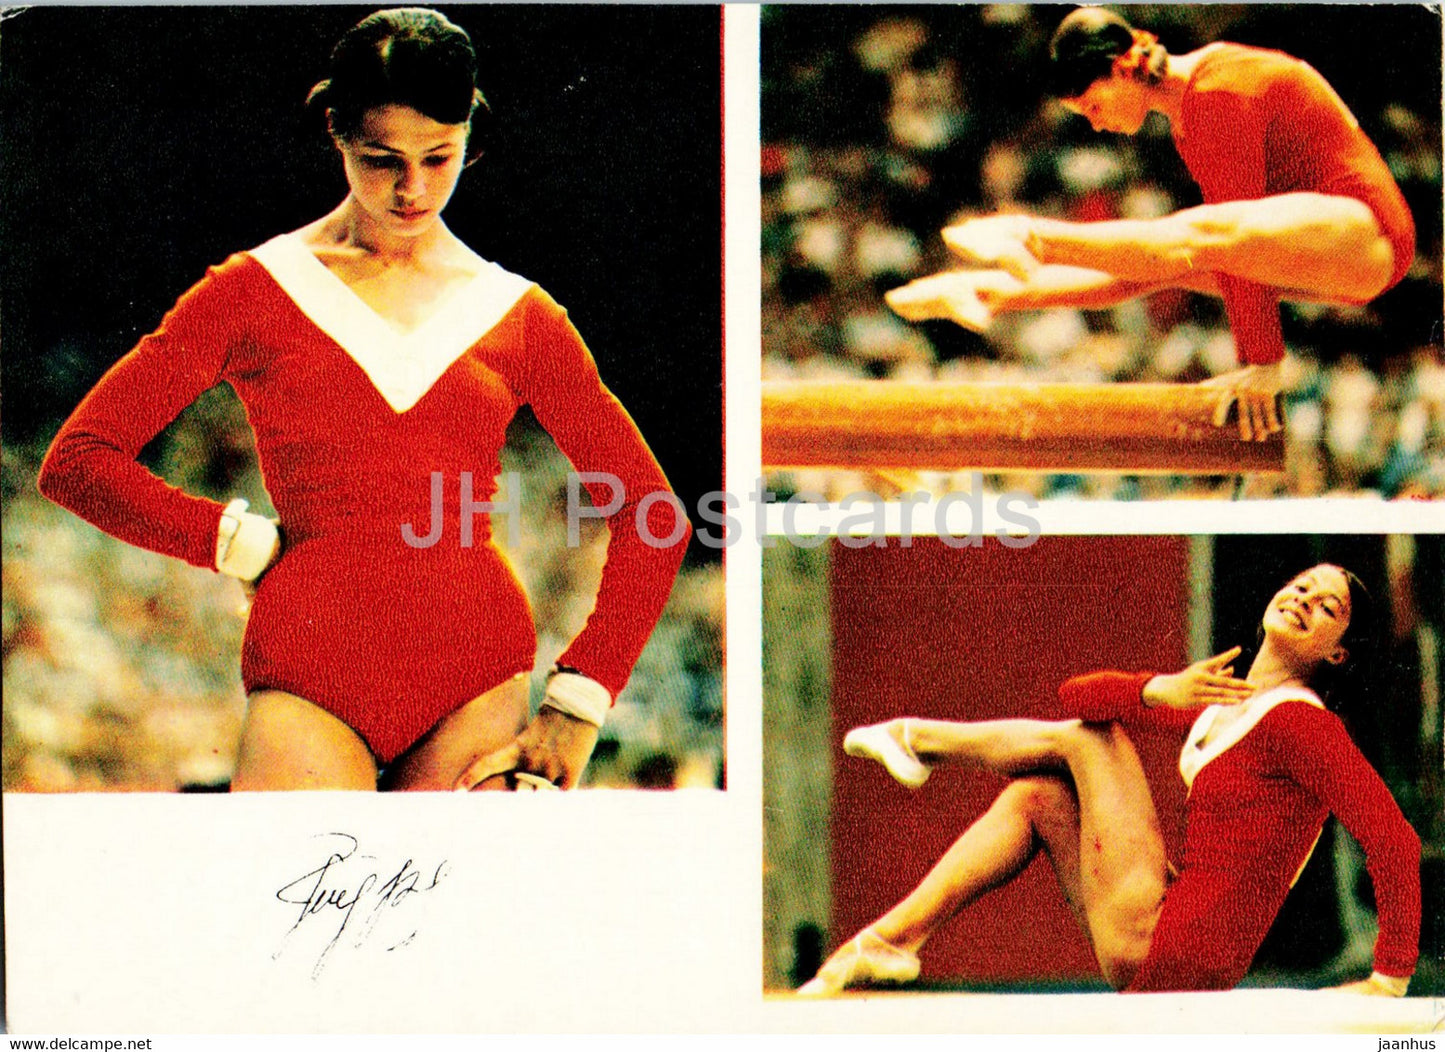 Ludmilla Tourischeva - gymnastics - Soviet champions - sports - 1974 - Russia USSR - unused - JH Postcards